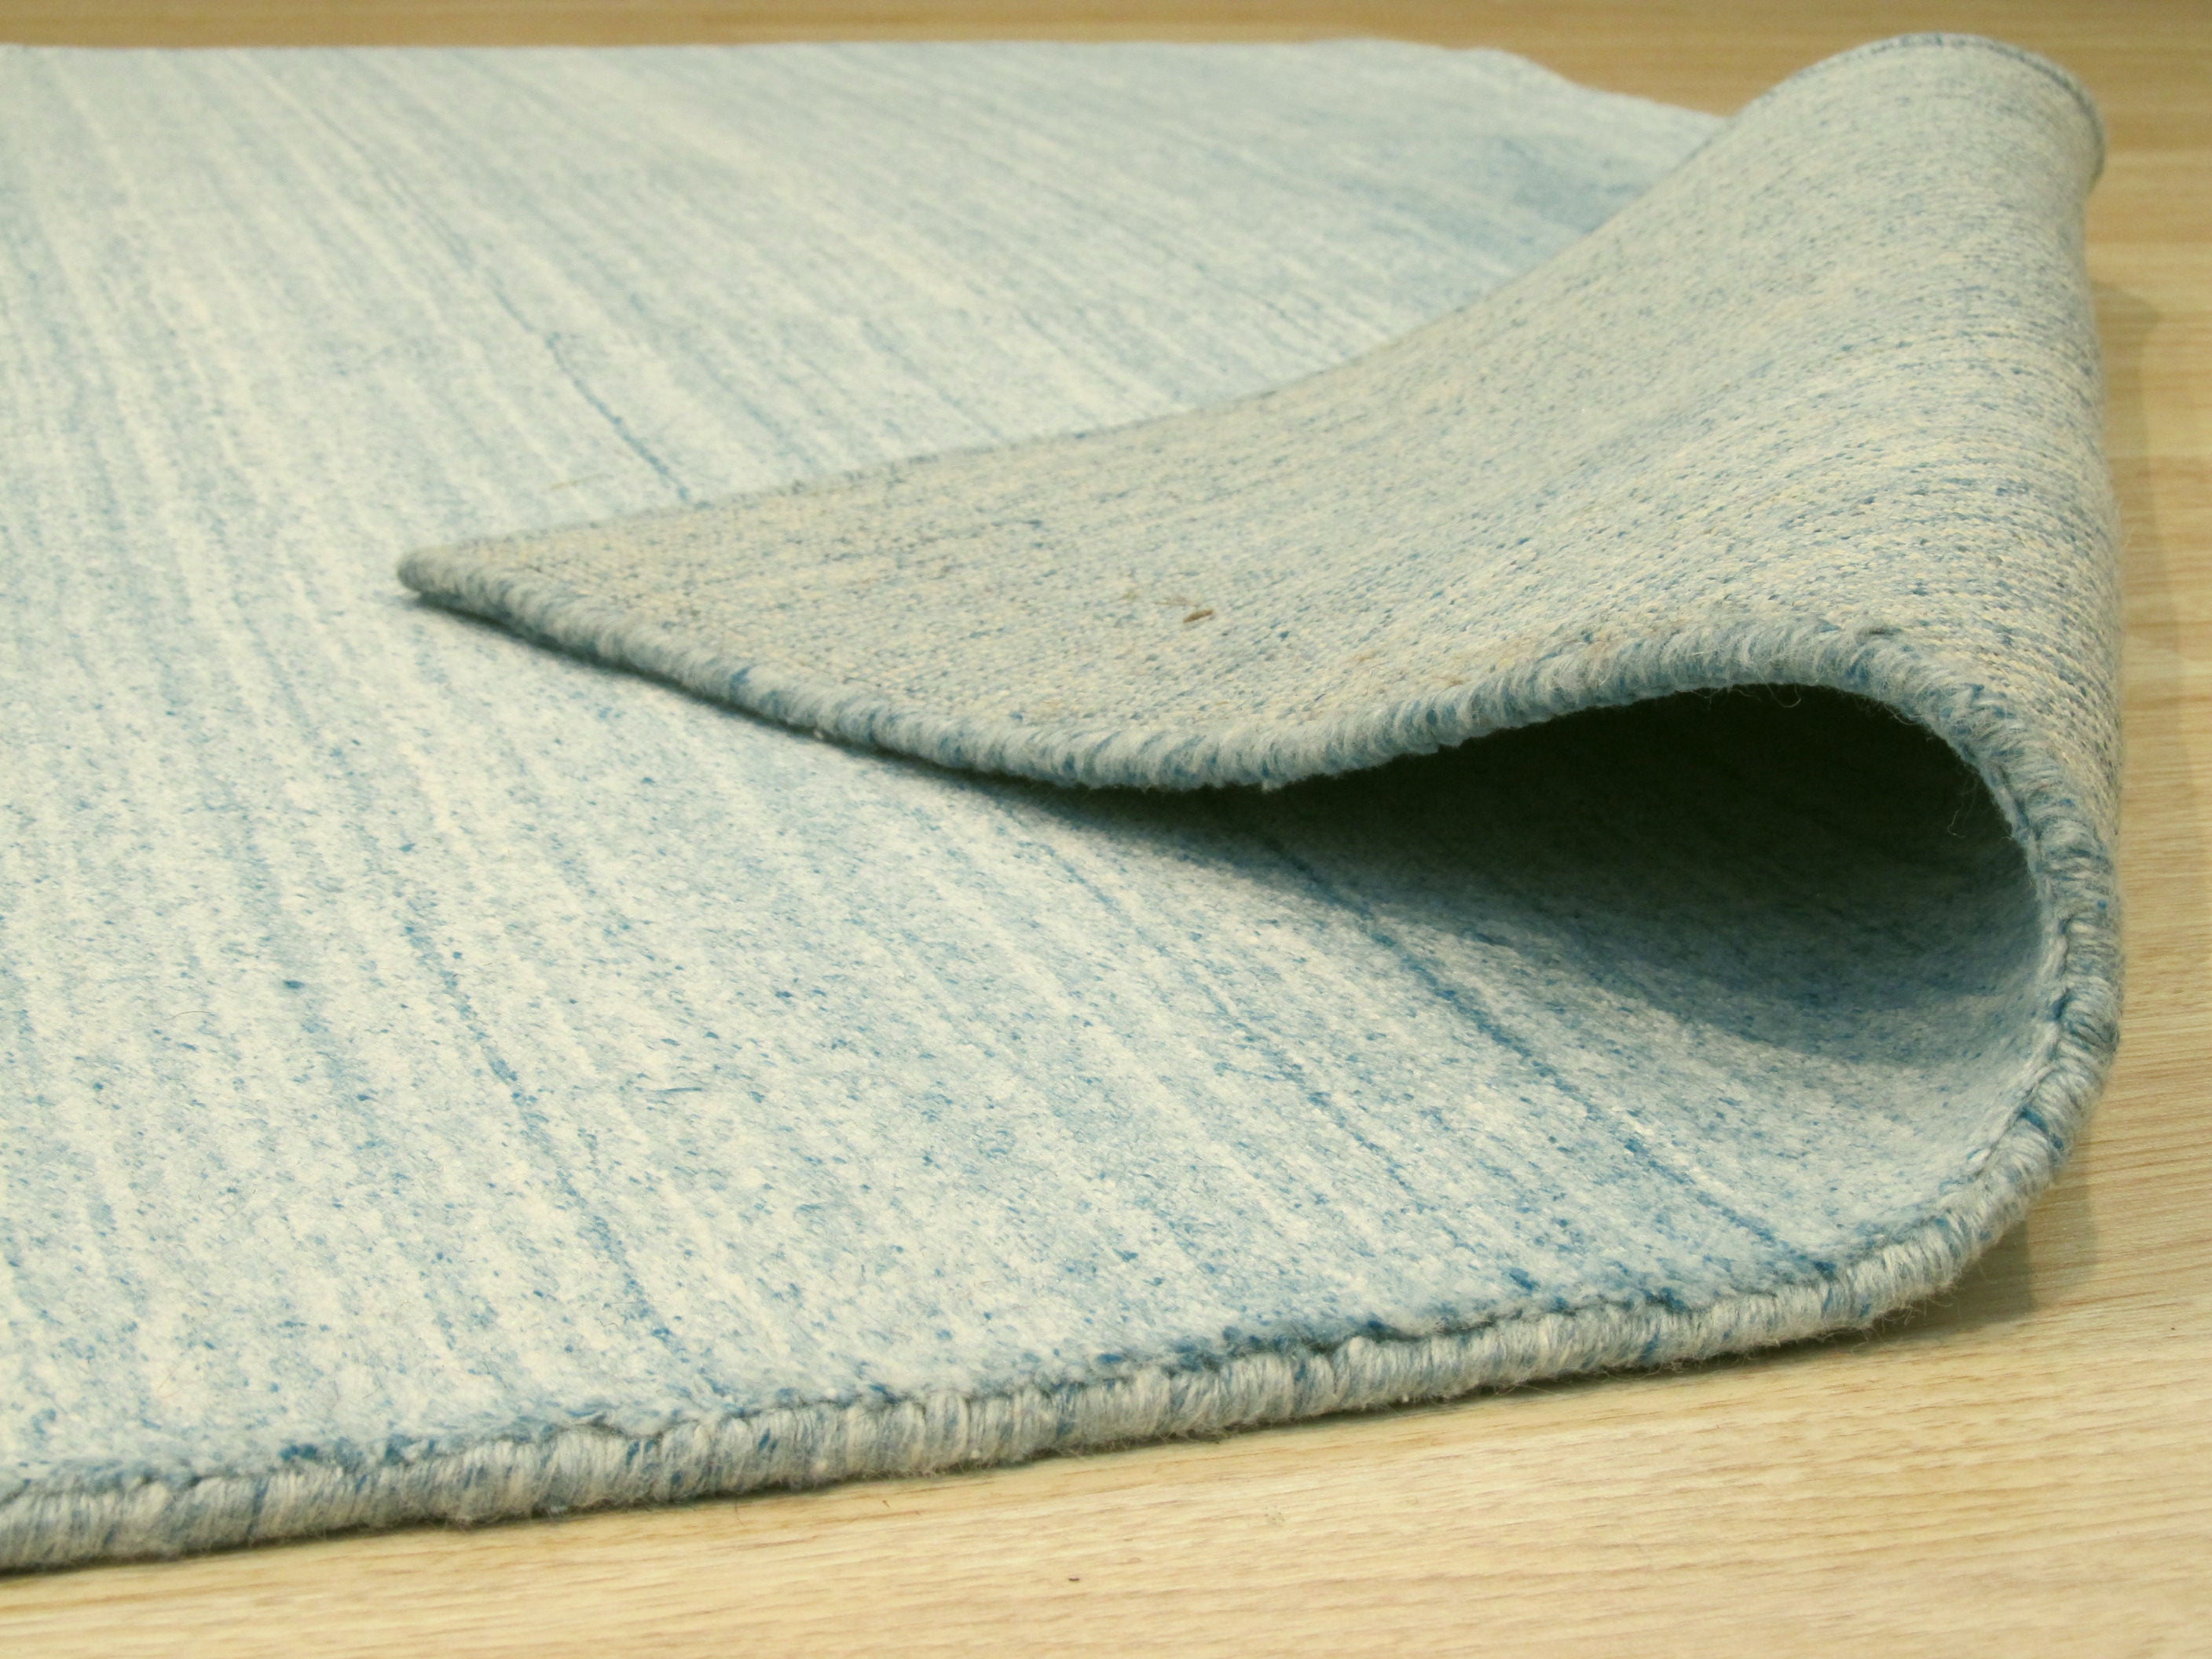 EORC Handmade Wool & Viscose Blue Contemporary Solid Urban Rug